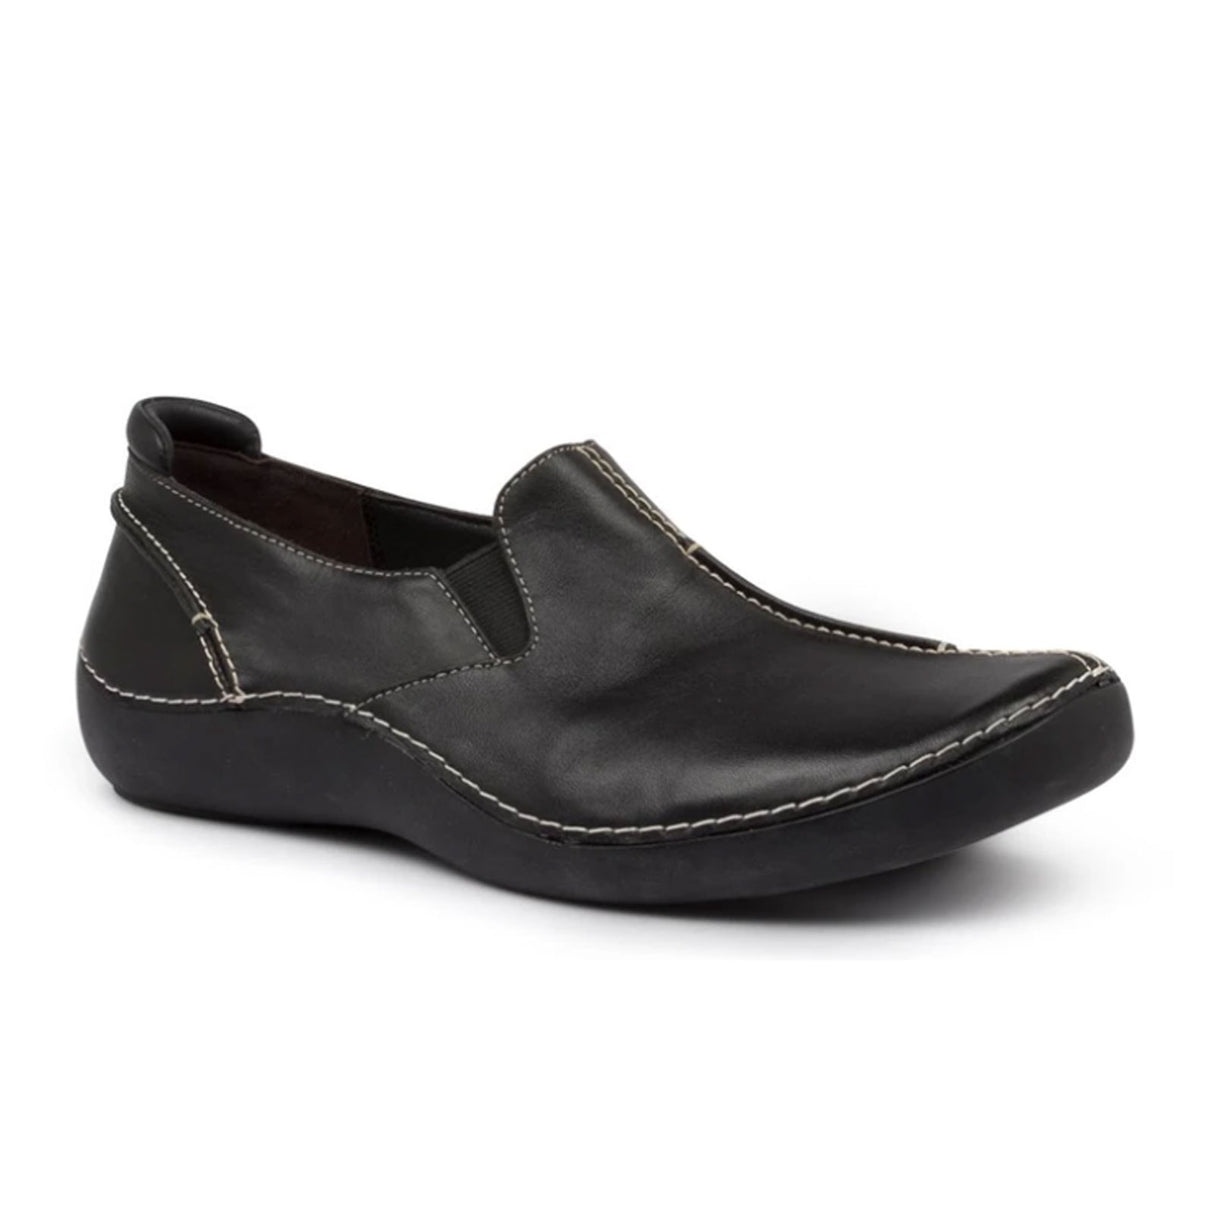 Ziera Luis Extra Wide Slip On (Women) - Black Leather Dress-Casual - Slip Ons - The Heel Shoe Fitters